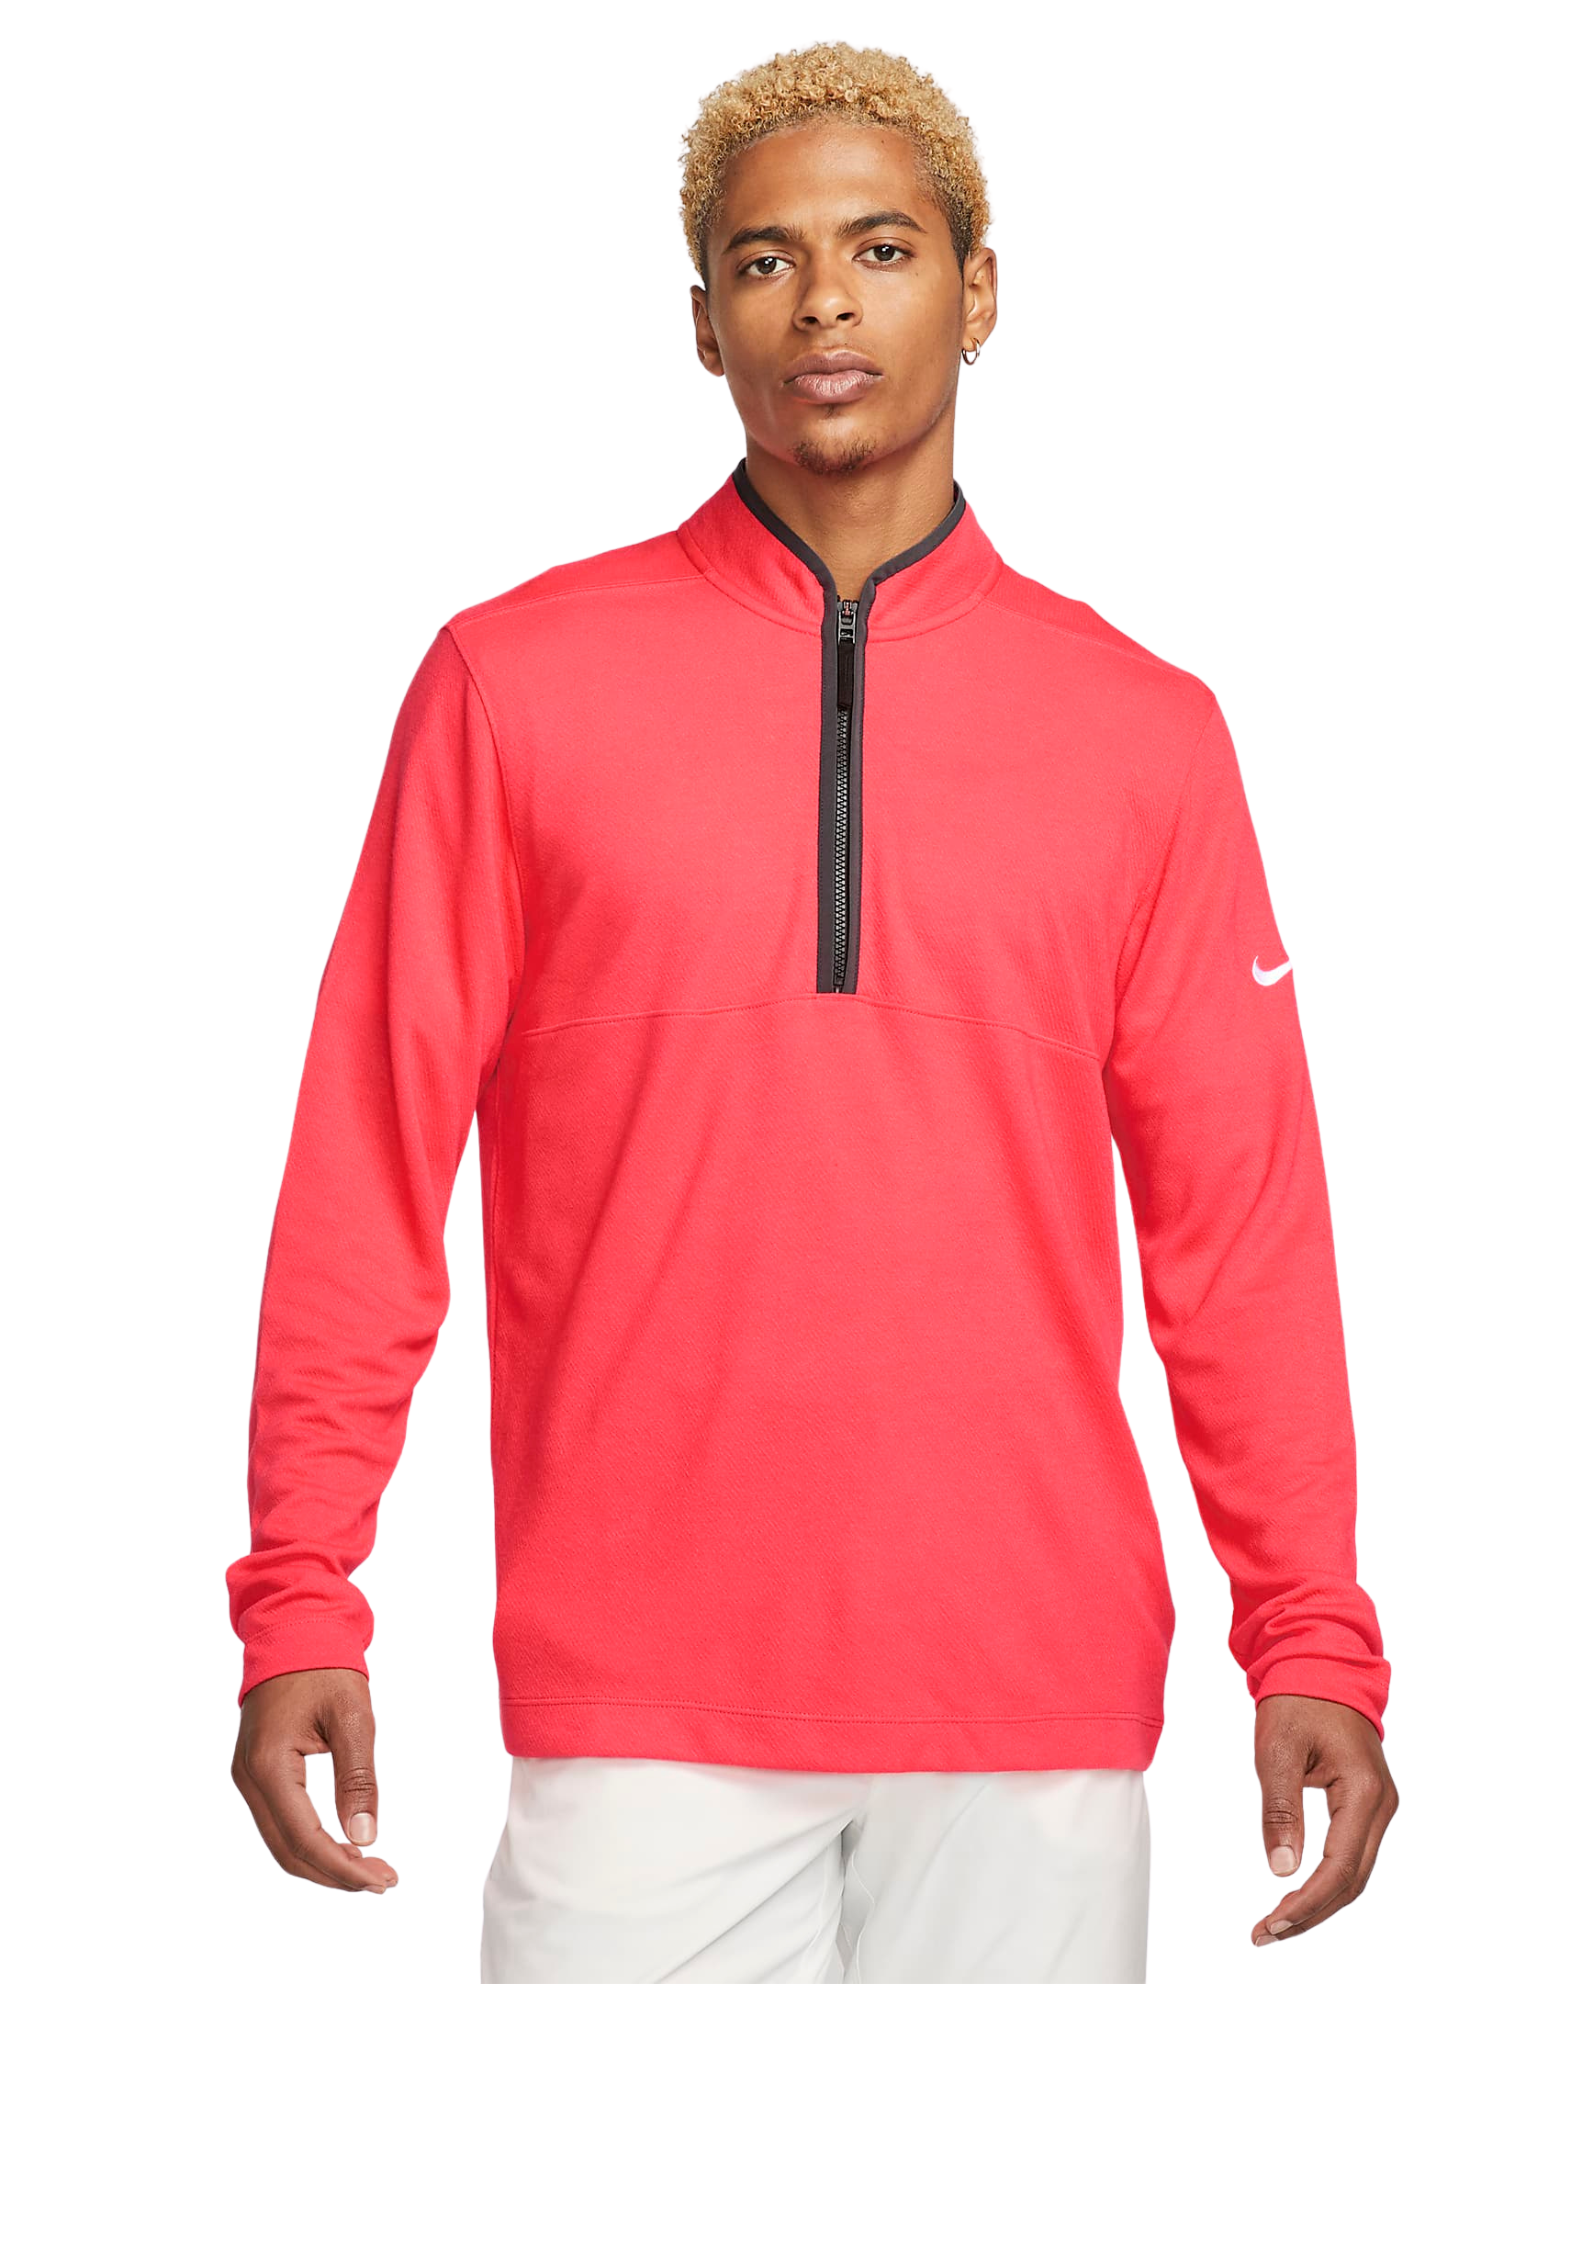 Nike | DJ5474-850 | Dri-FIT Victory Men's Half-Zip Golf Top | Ember